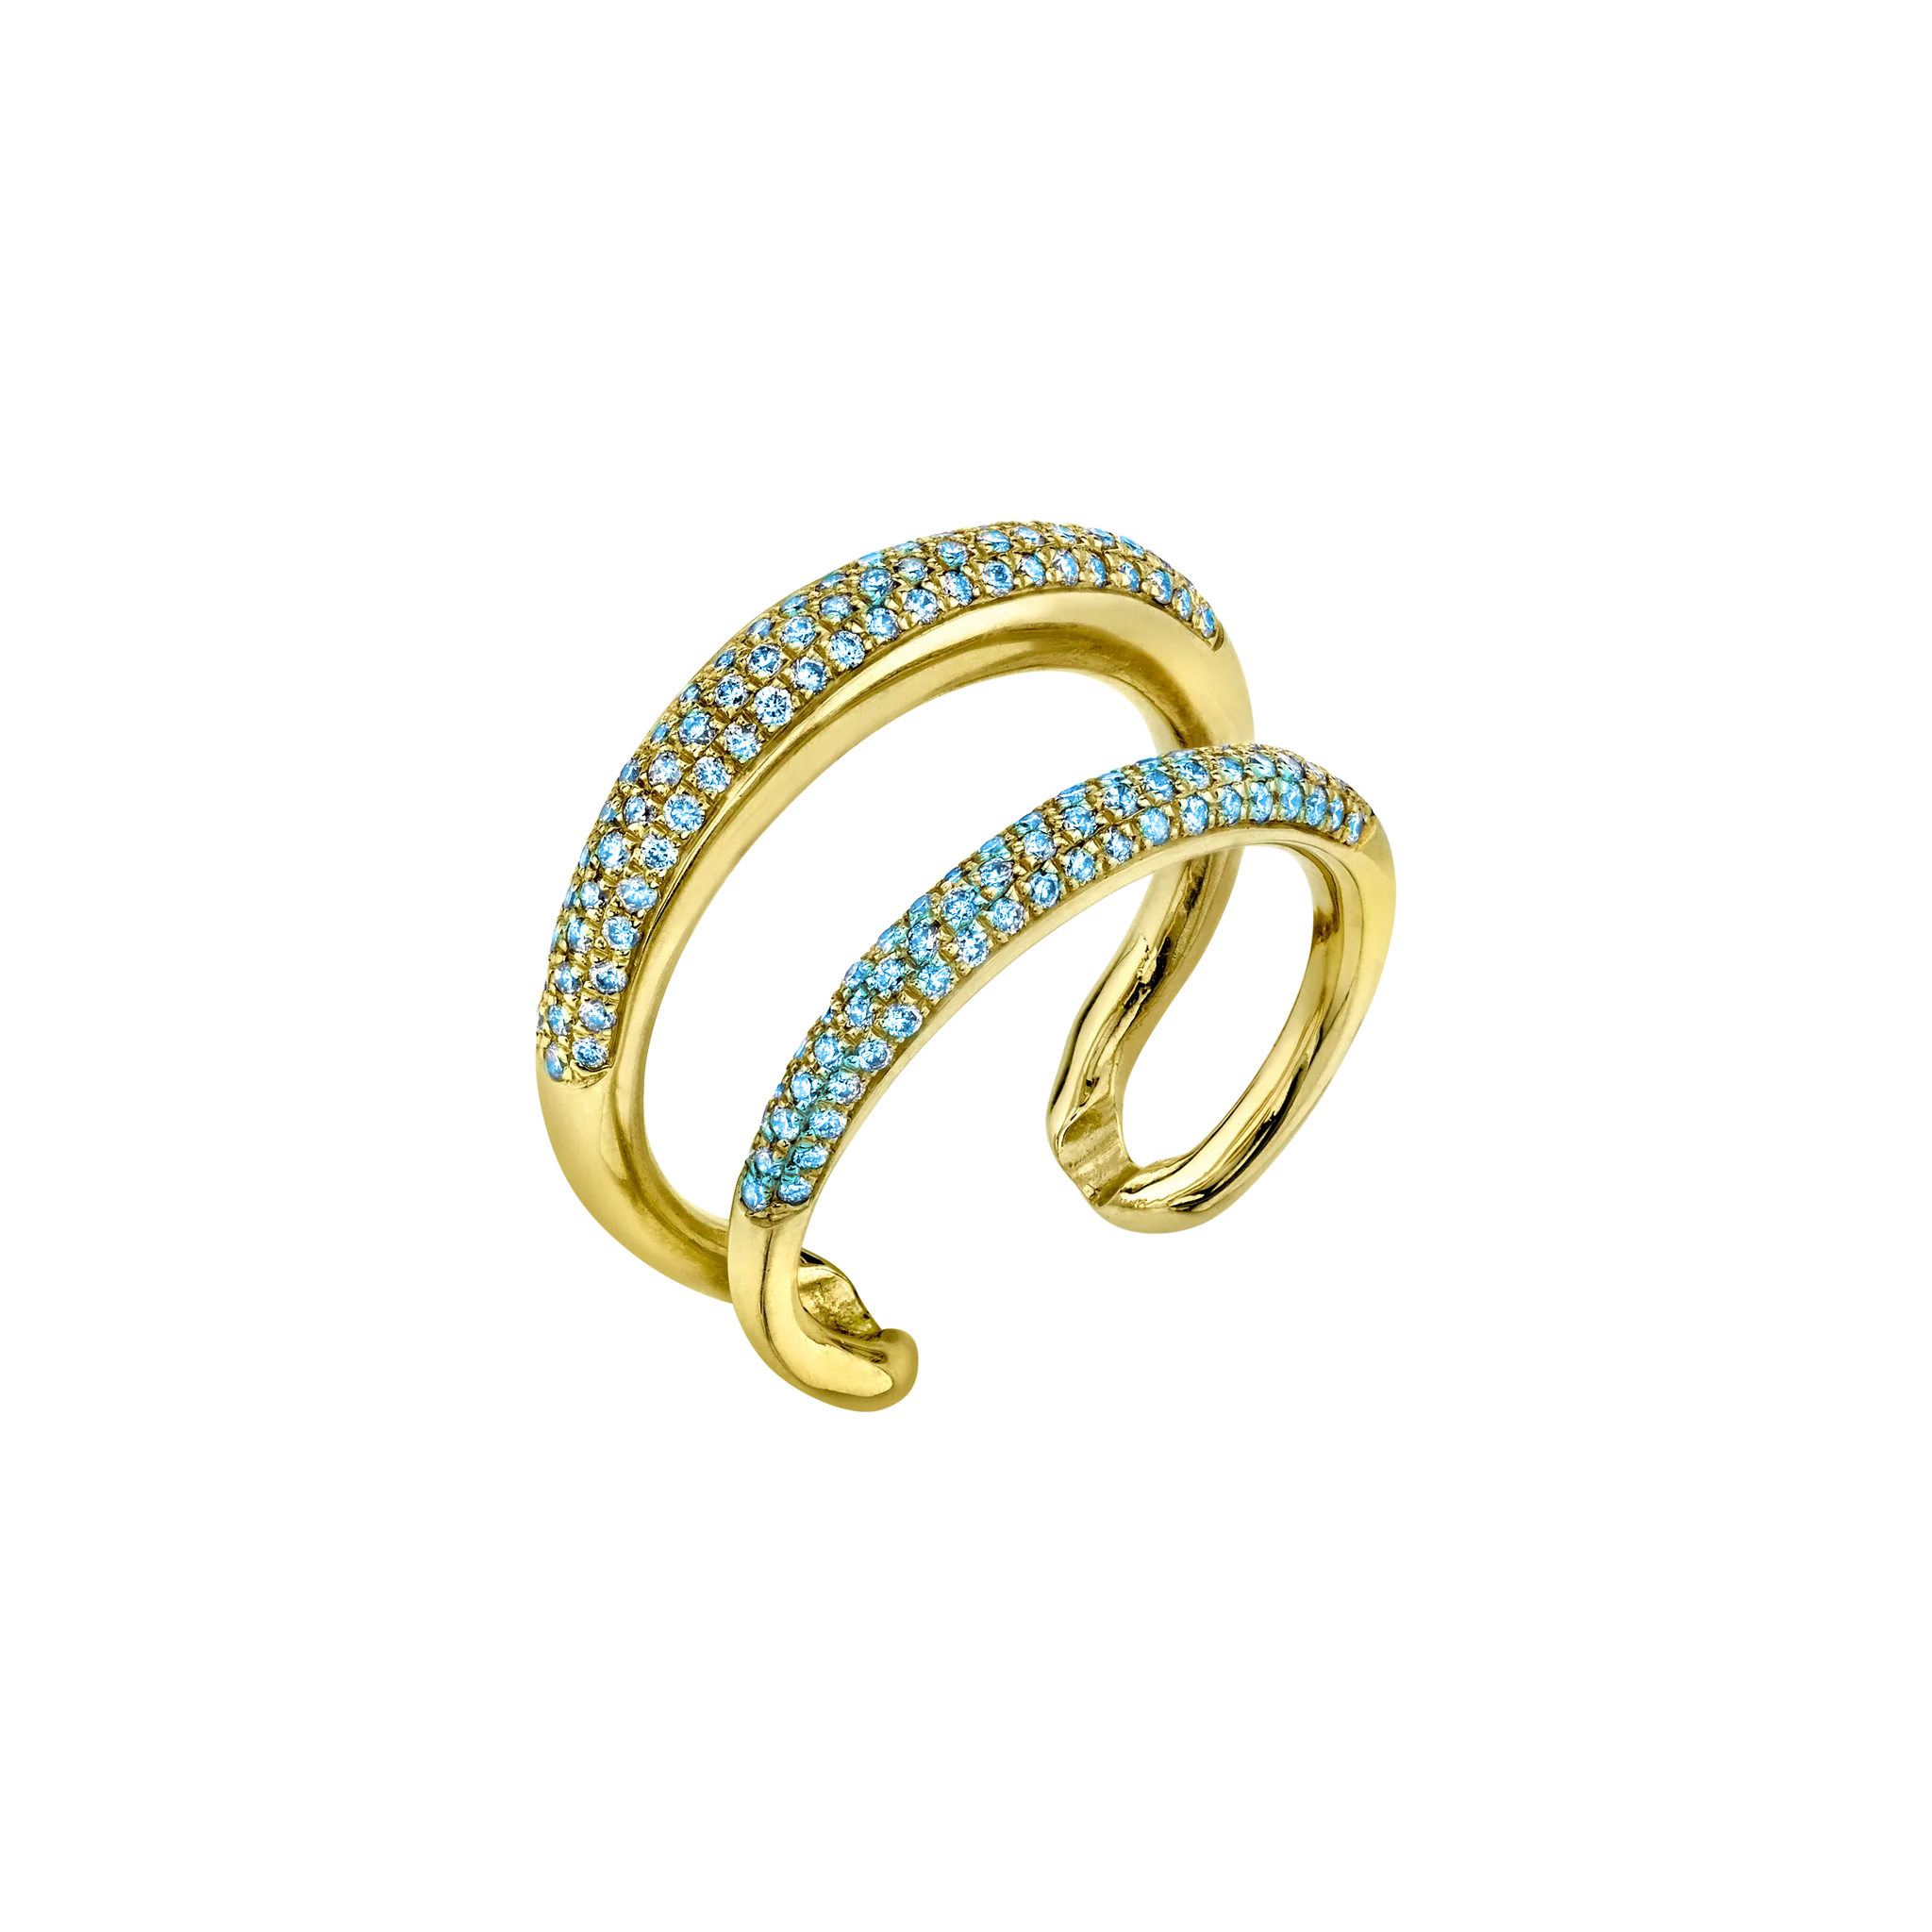 Twin Tusk Ring with Double Pavé Aquamarines - Gabriela Artigas